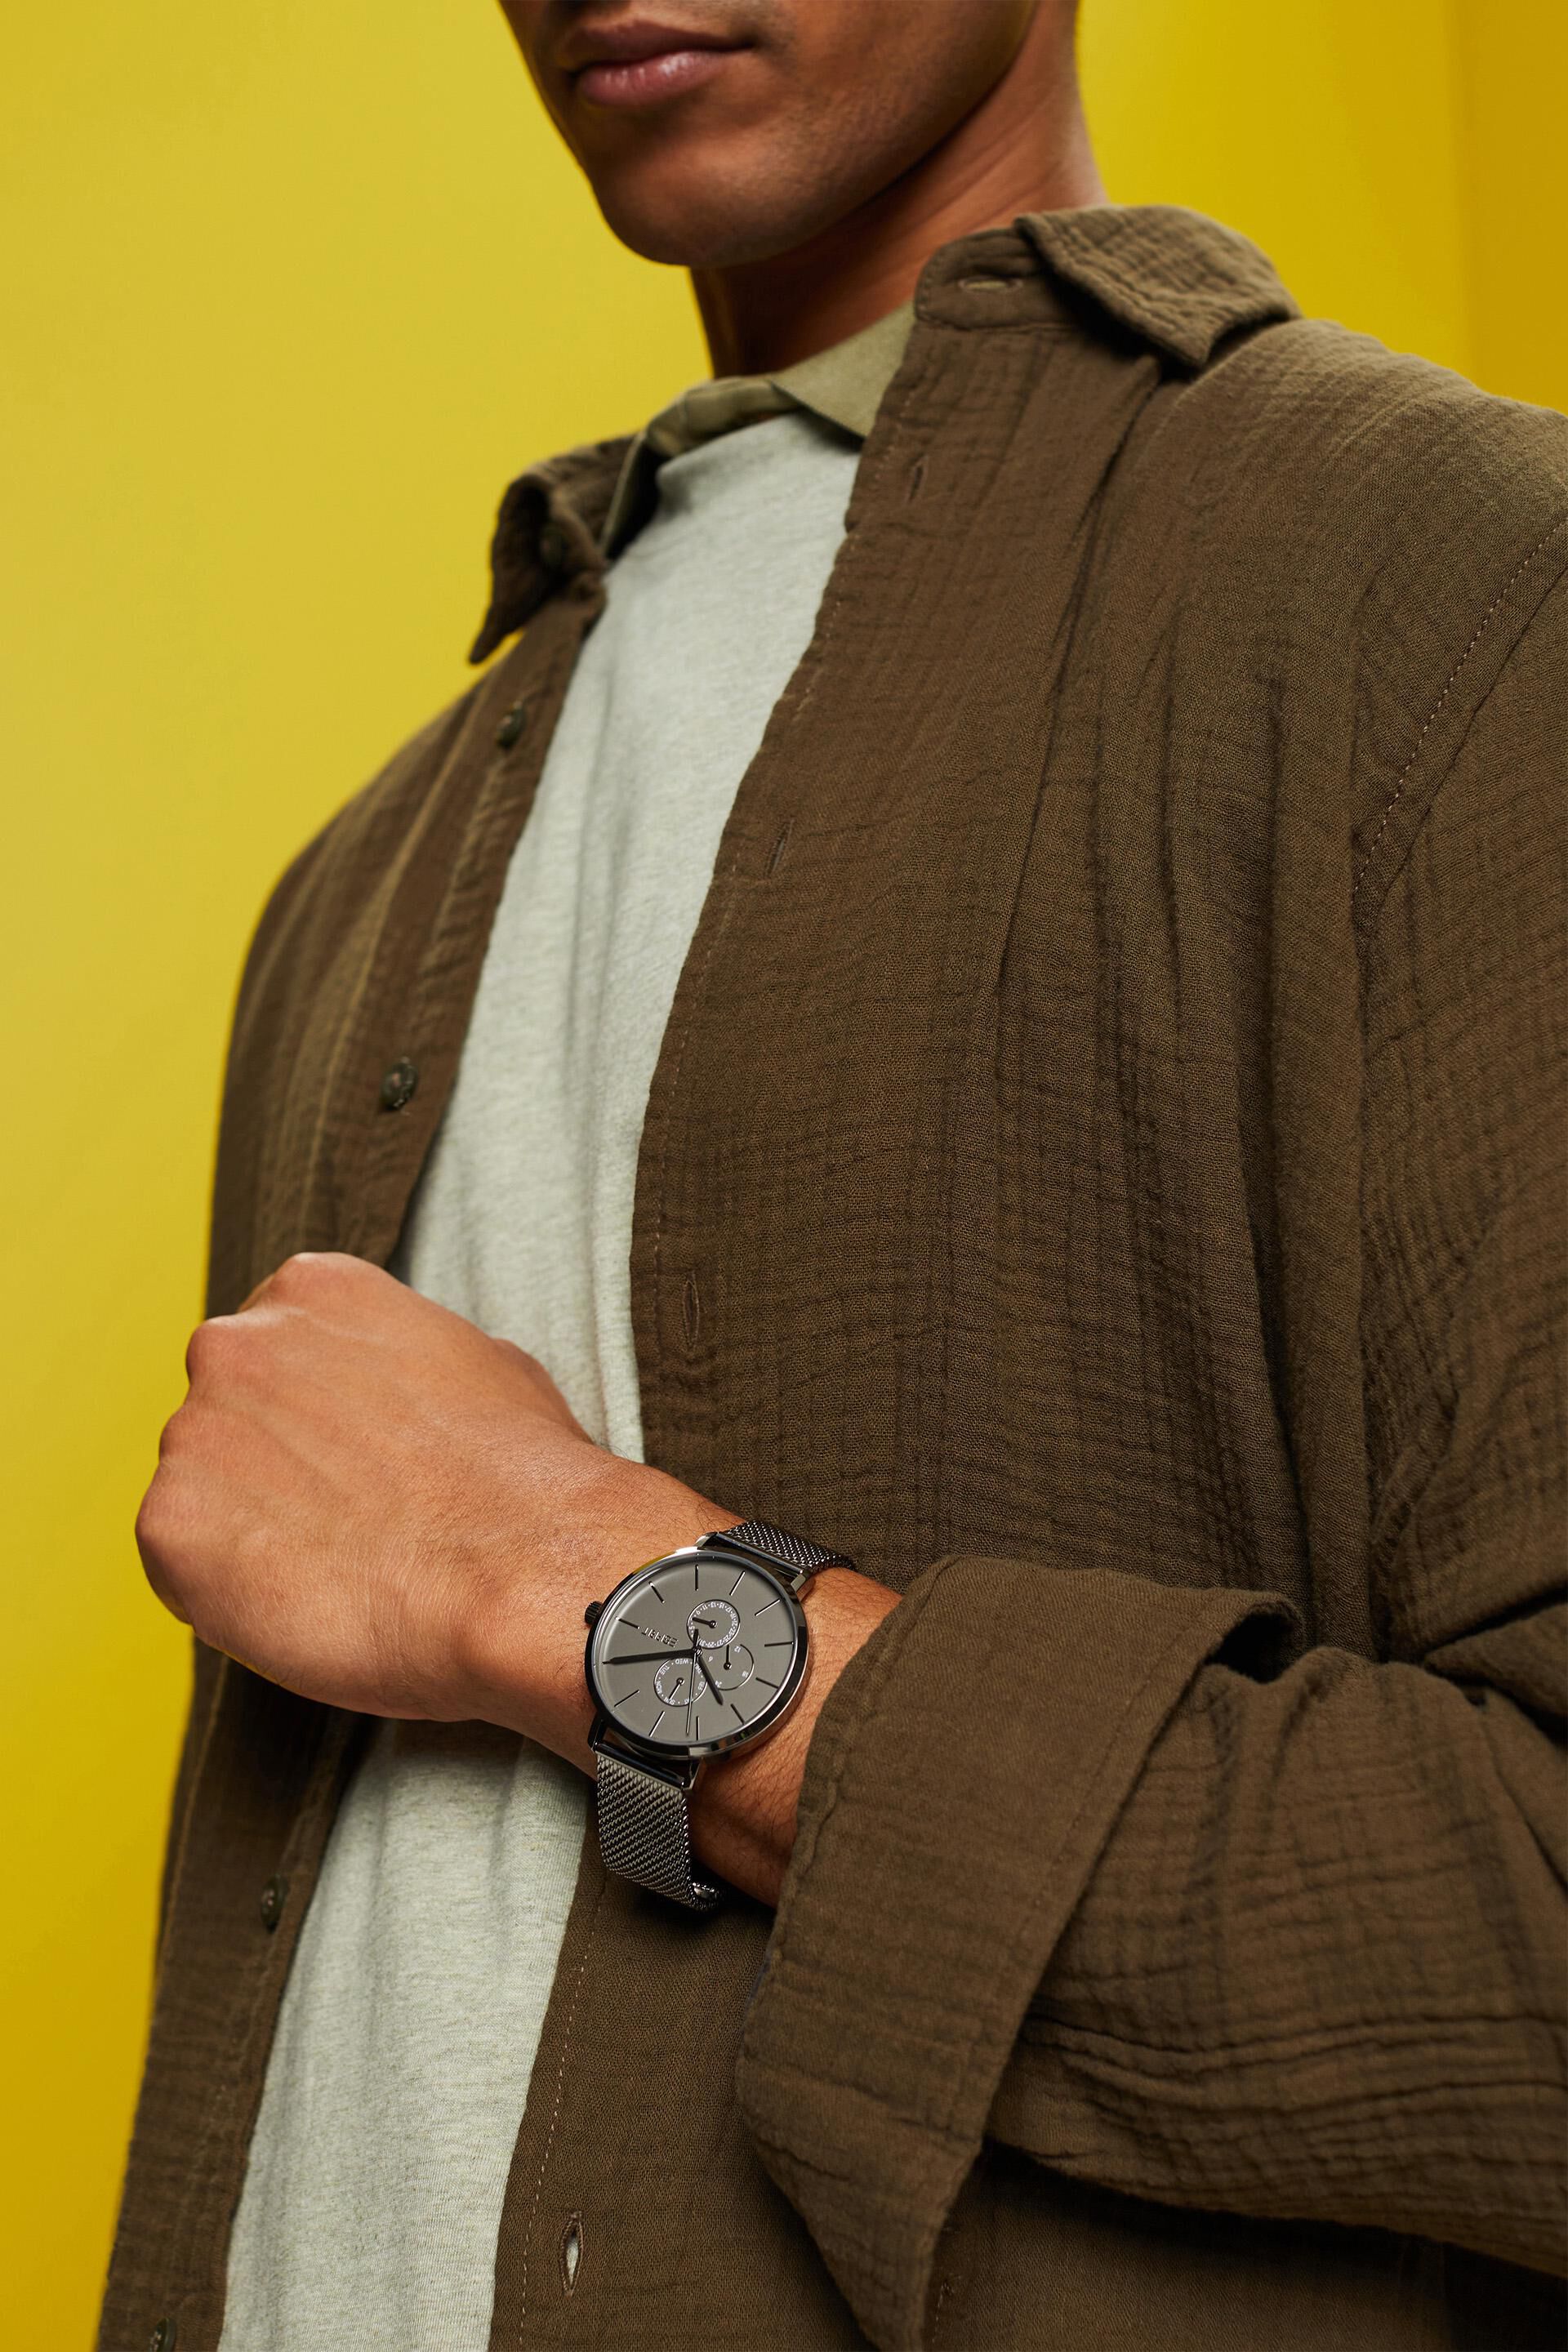 Esprit Mode Uhr mit Edelstahl-Mesh-Armband